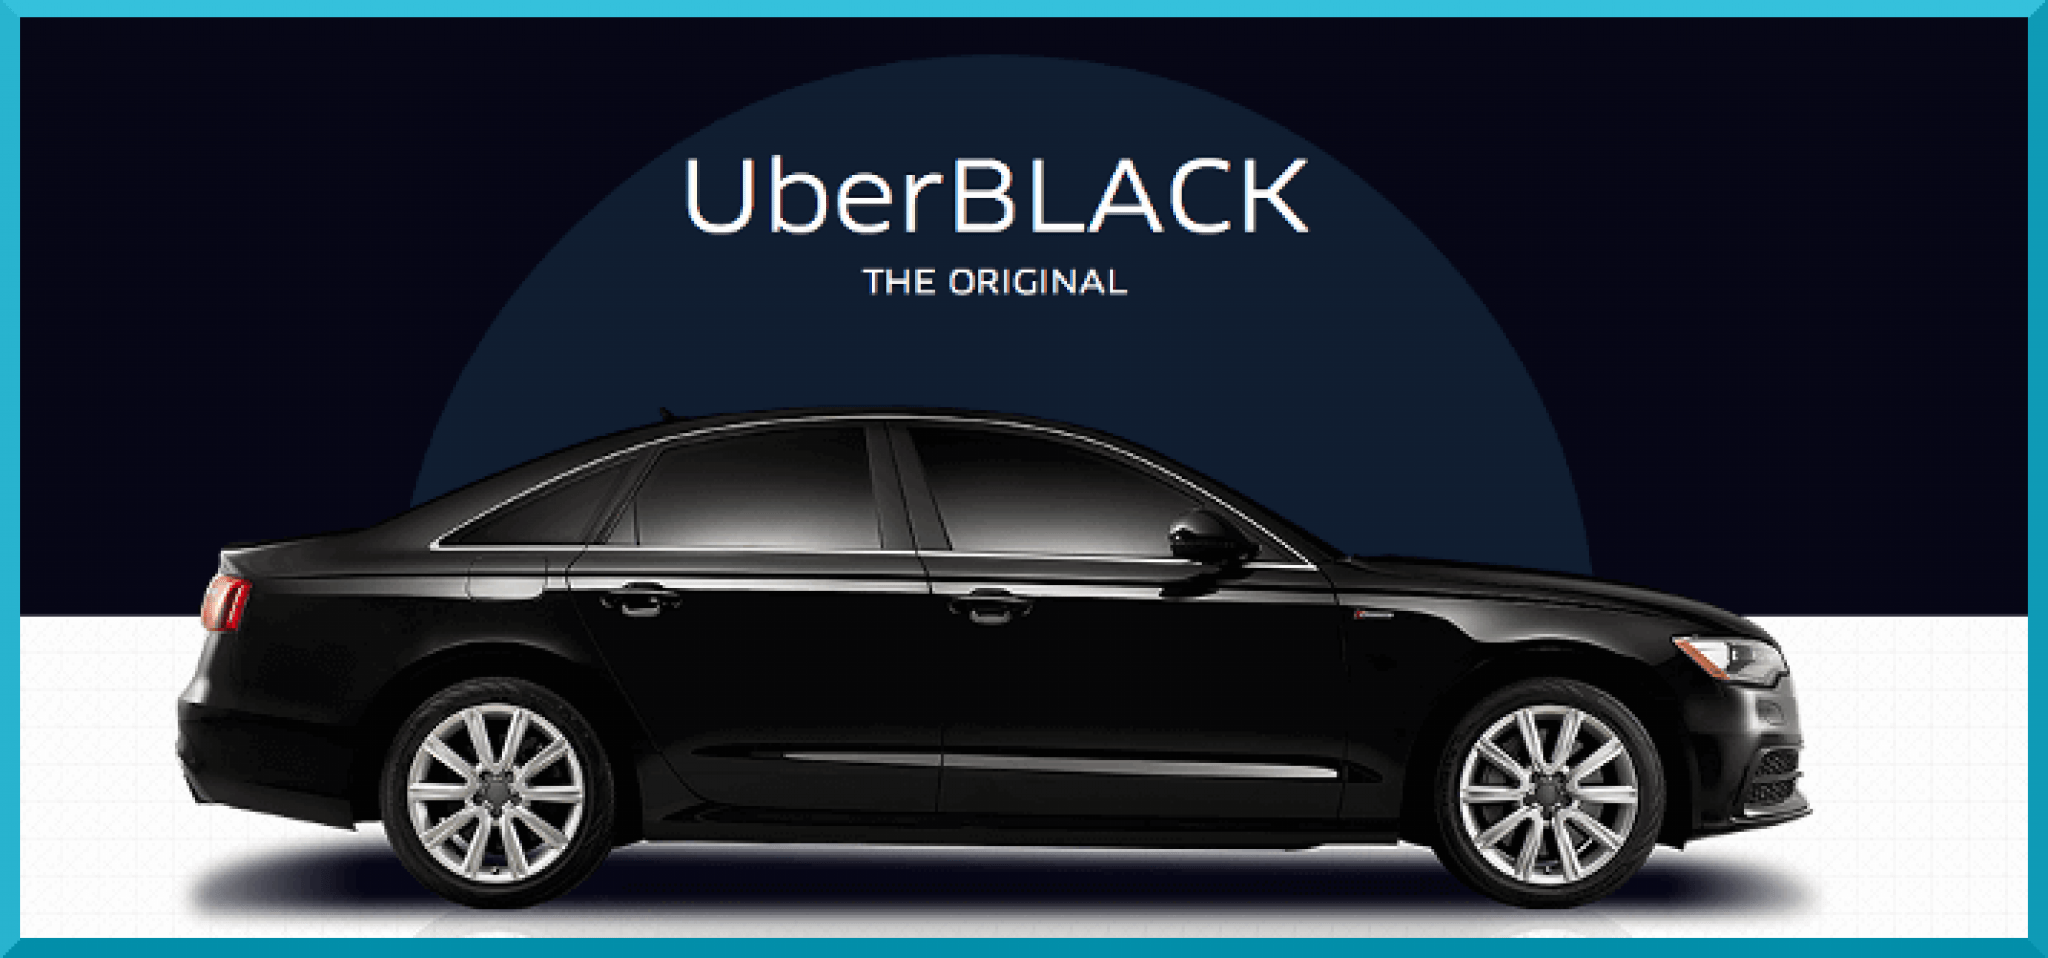 uber-car-types-simply-explained-with-photos-replicarclub